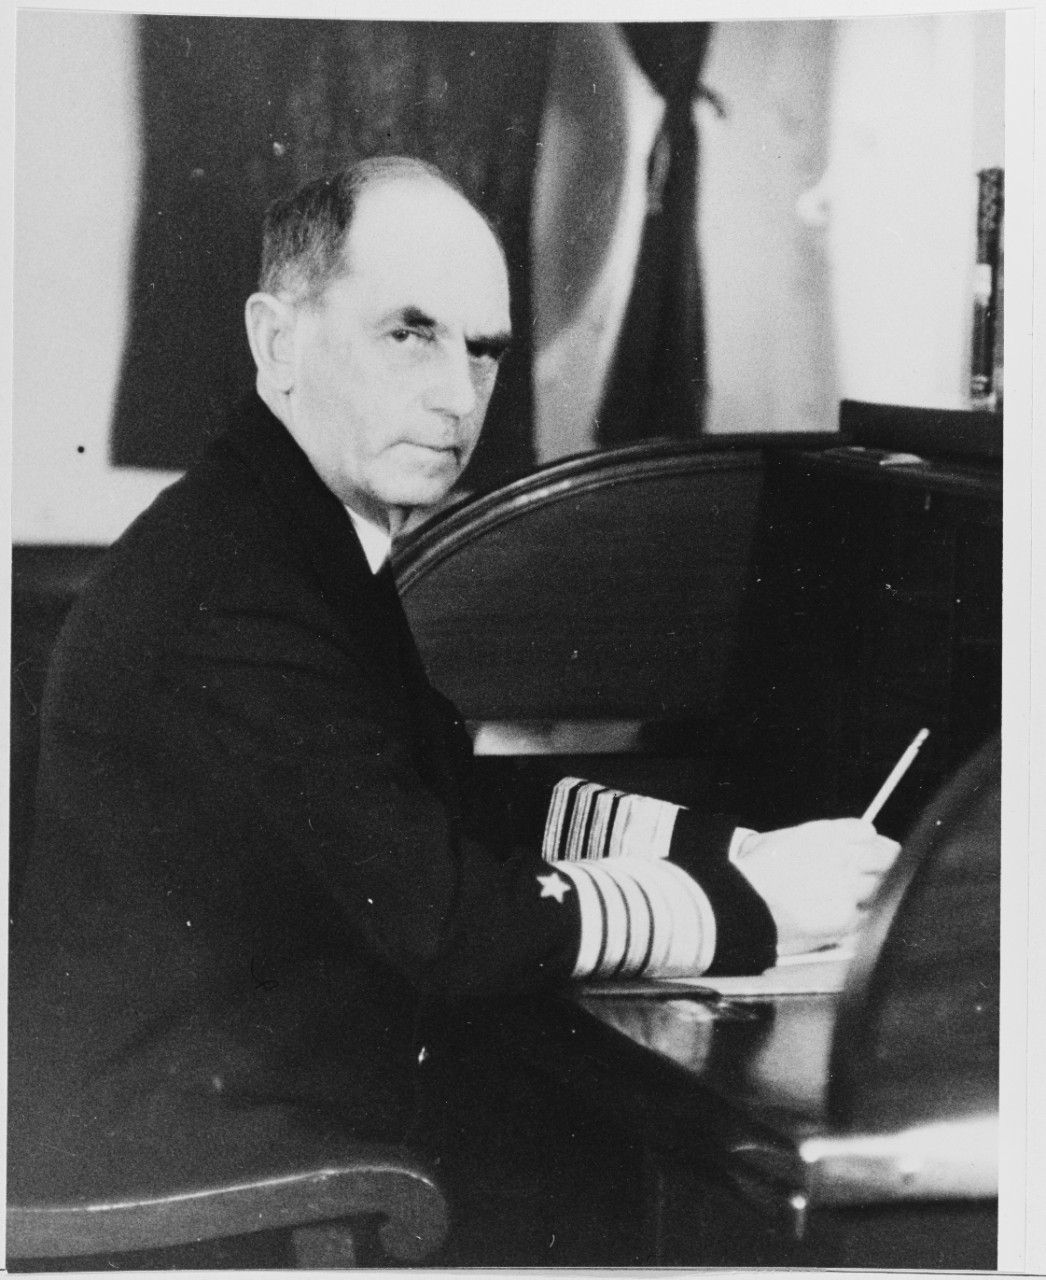 ADM Leahy as Commander battle forces, U.S. Fleet. Flagship USS CALIFORNIA Dec, 1936.